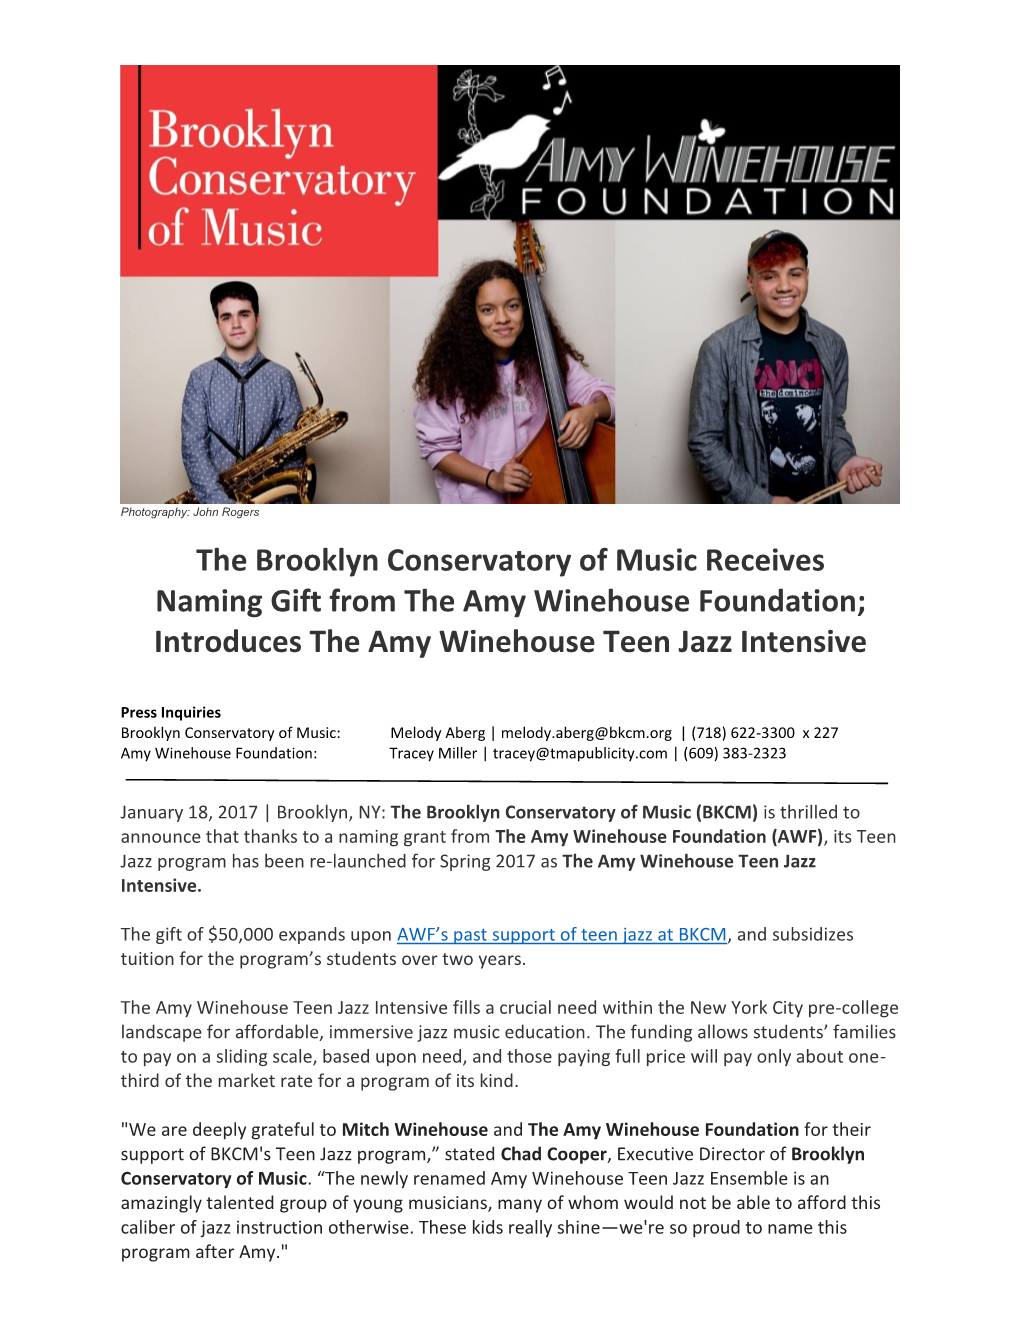 Brooklyn Conservatory's Teen Jazz